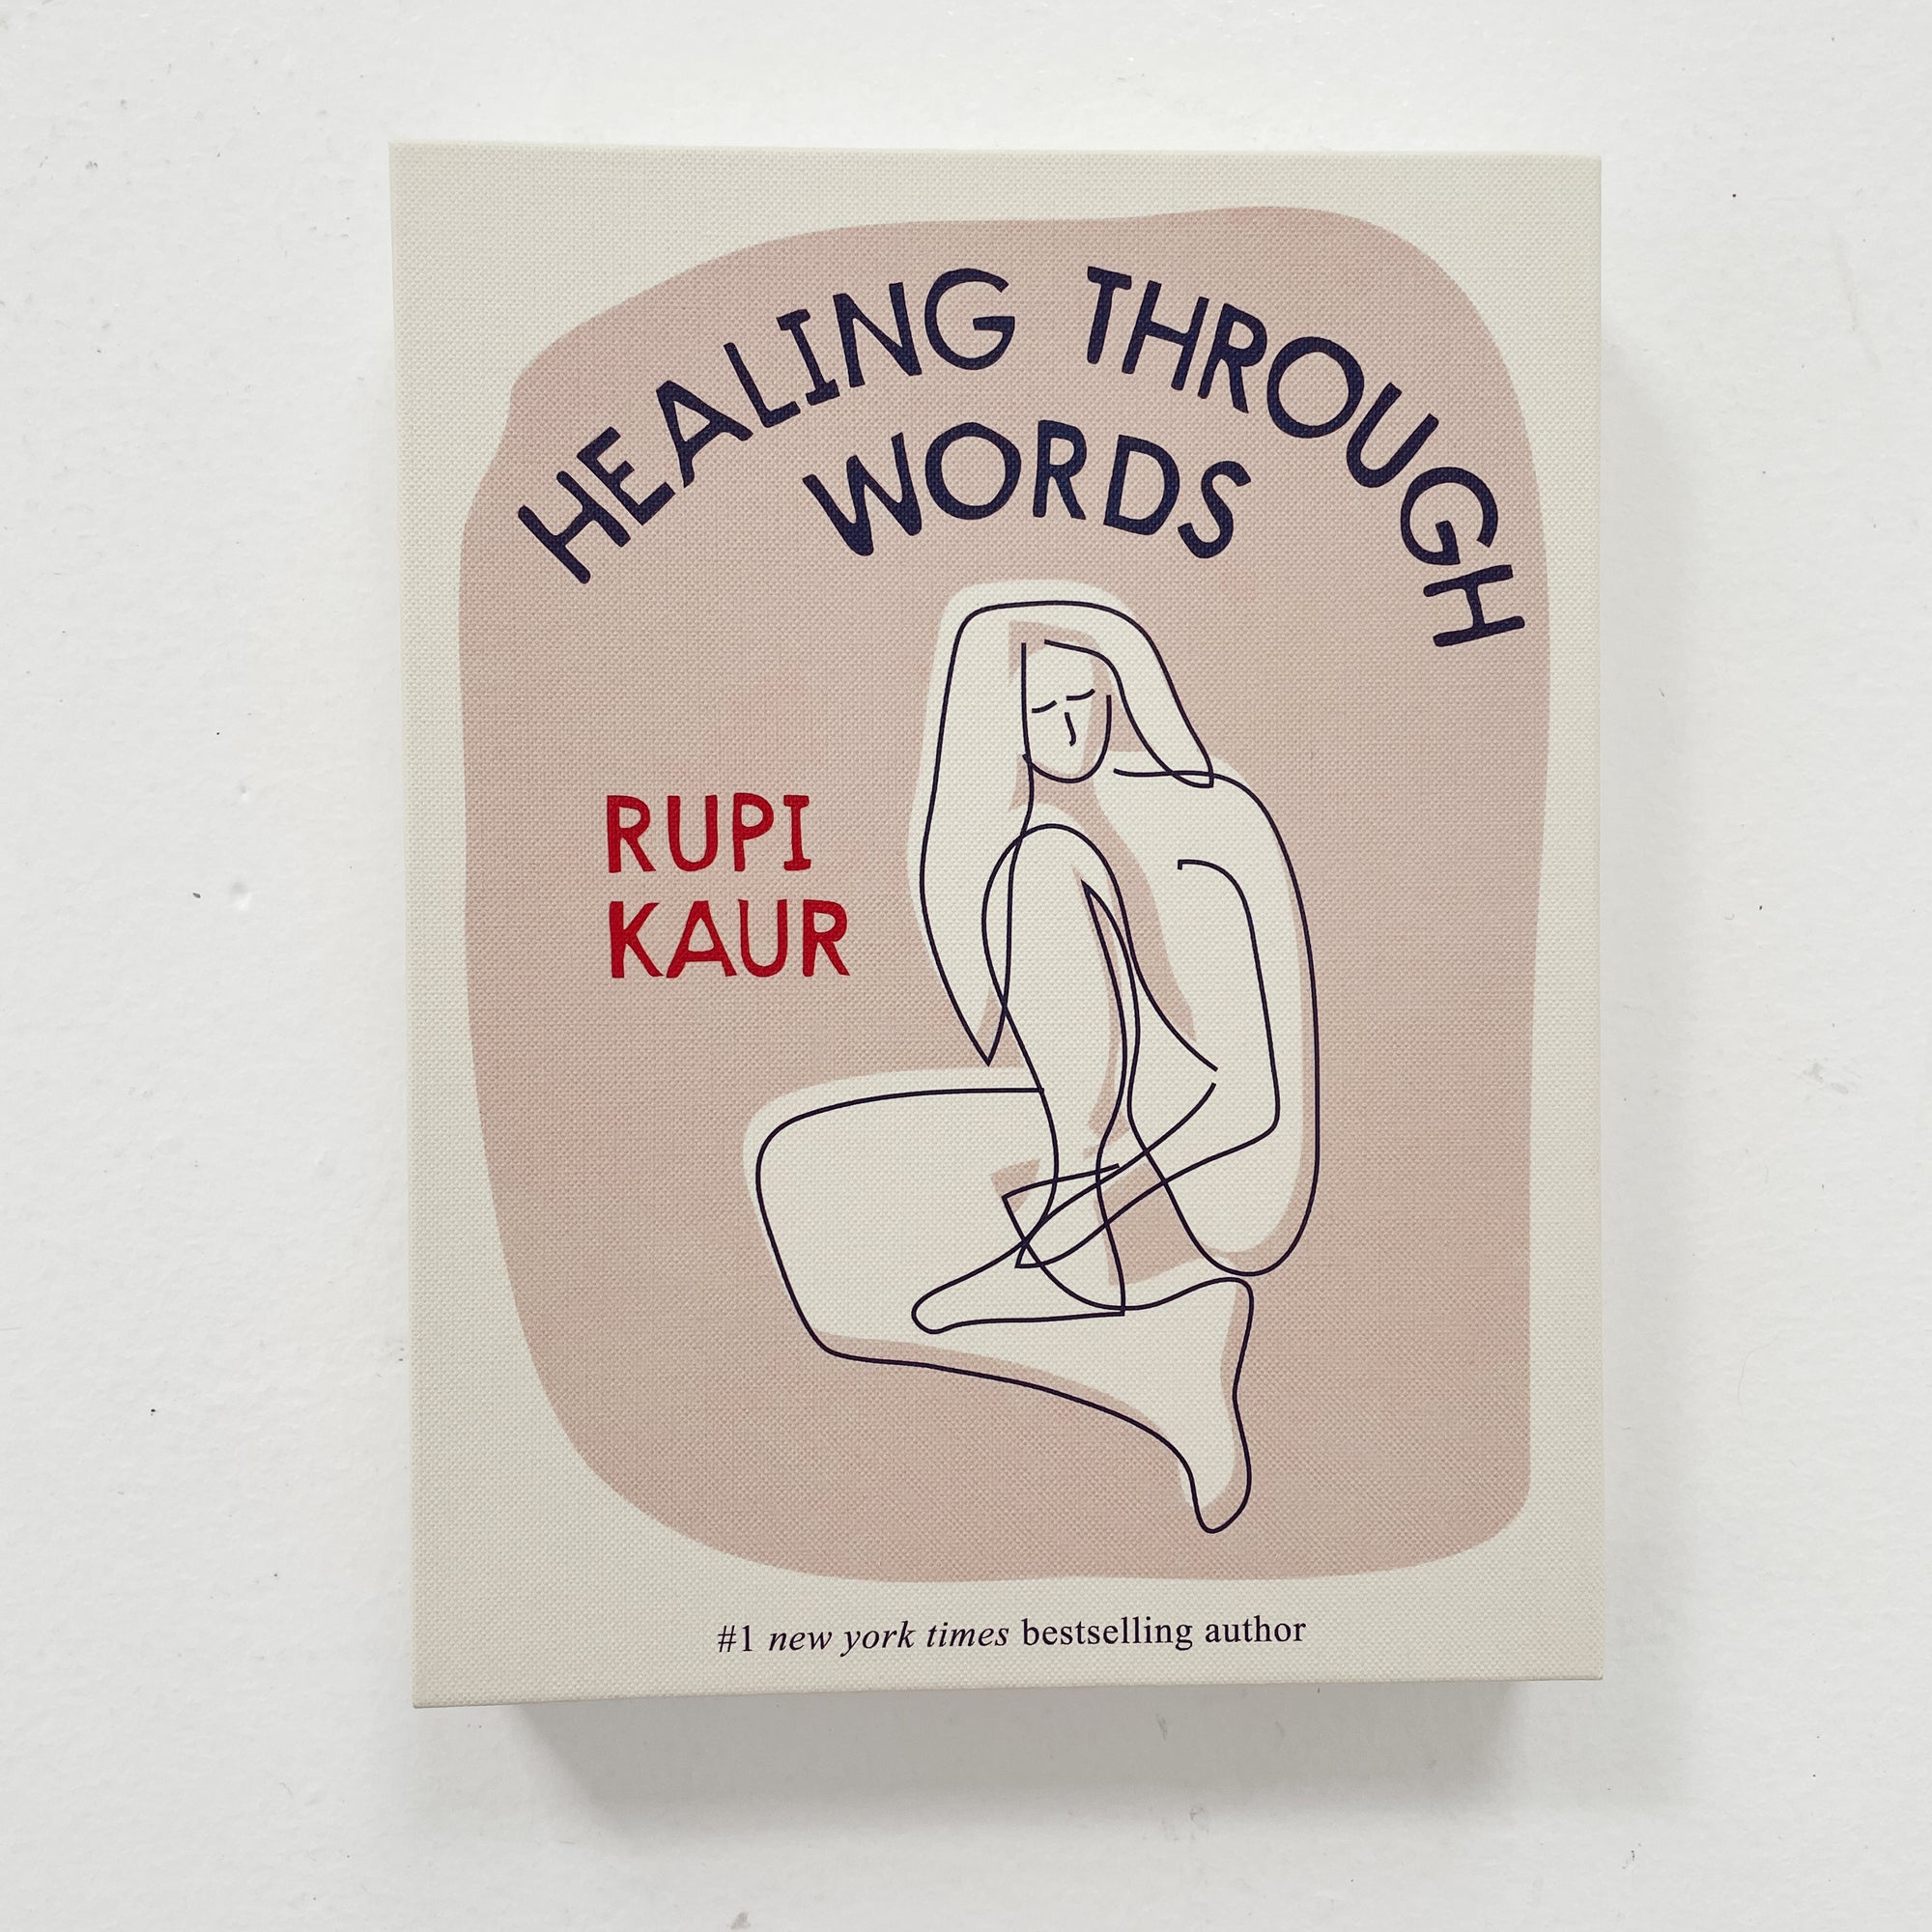 HEALING THROUGH WORDS BY RUPI KAUR